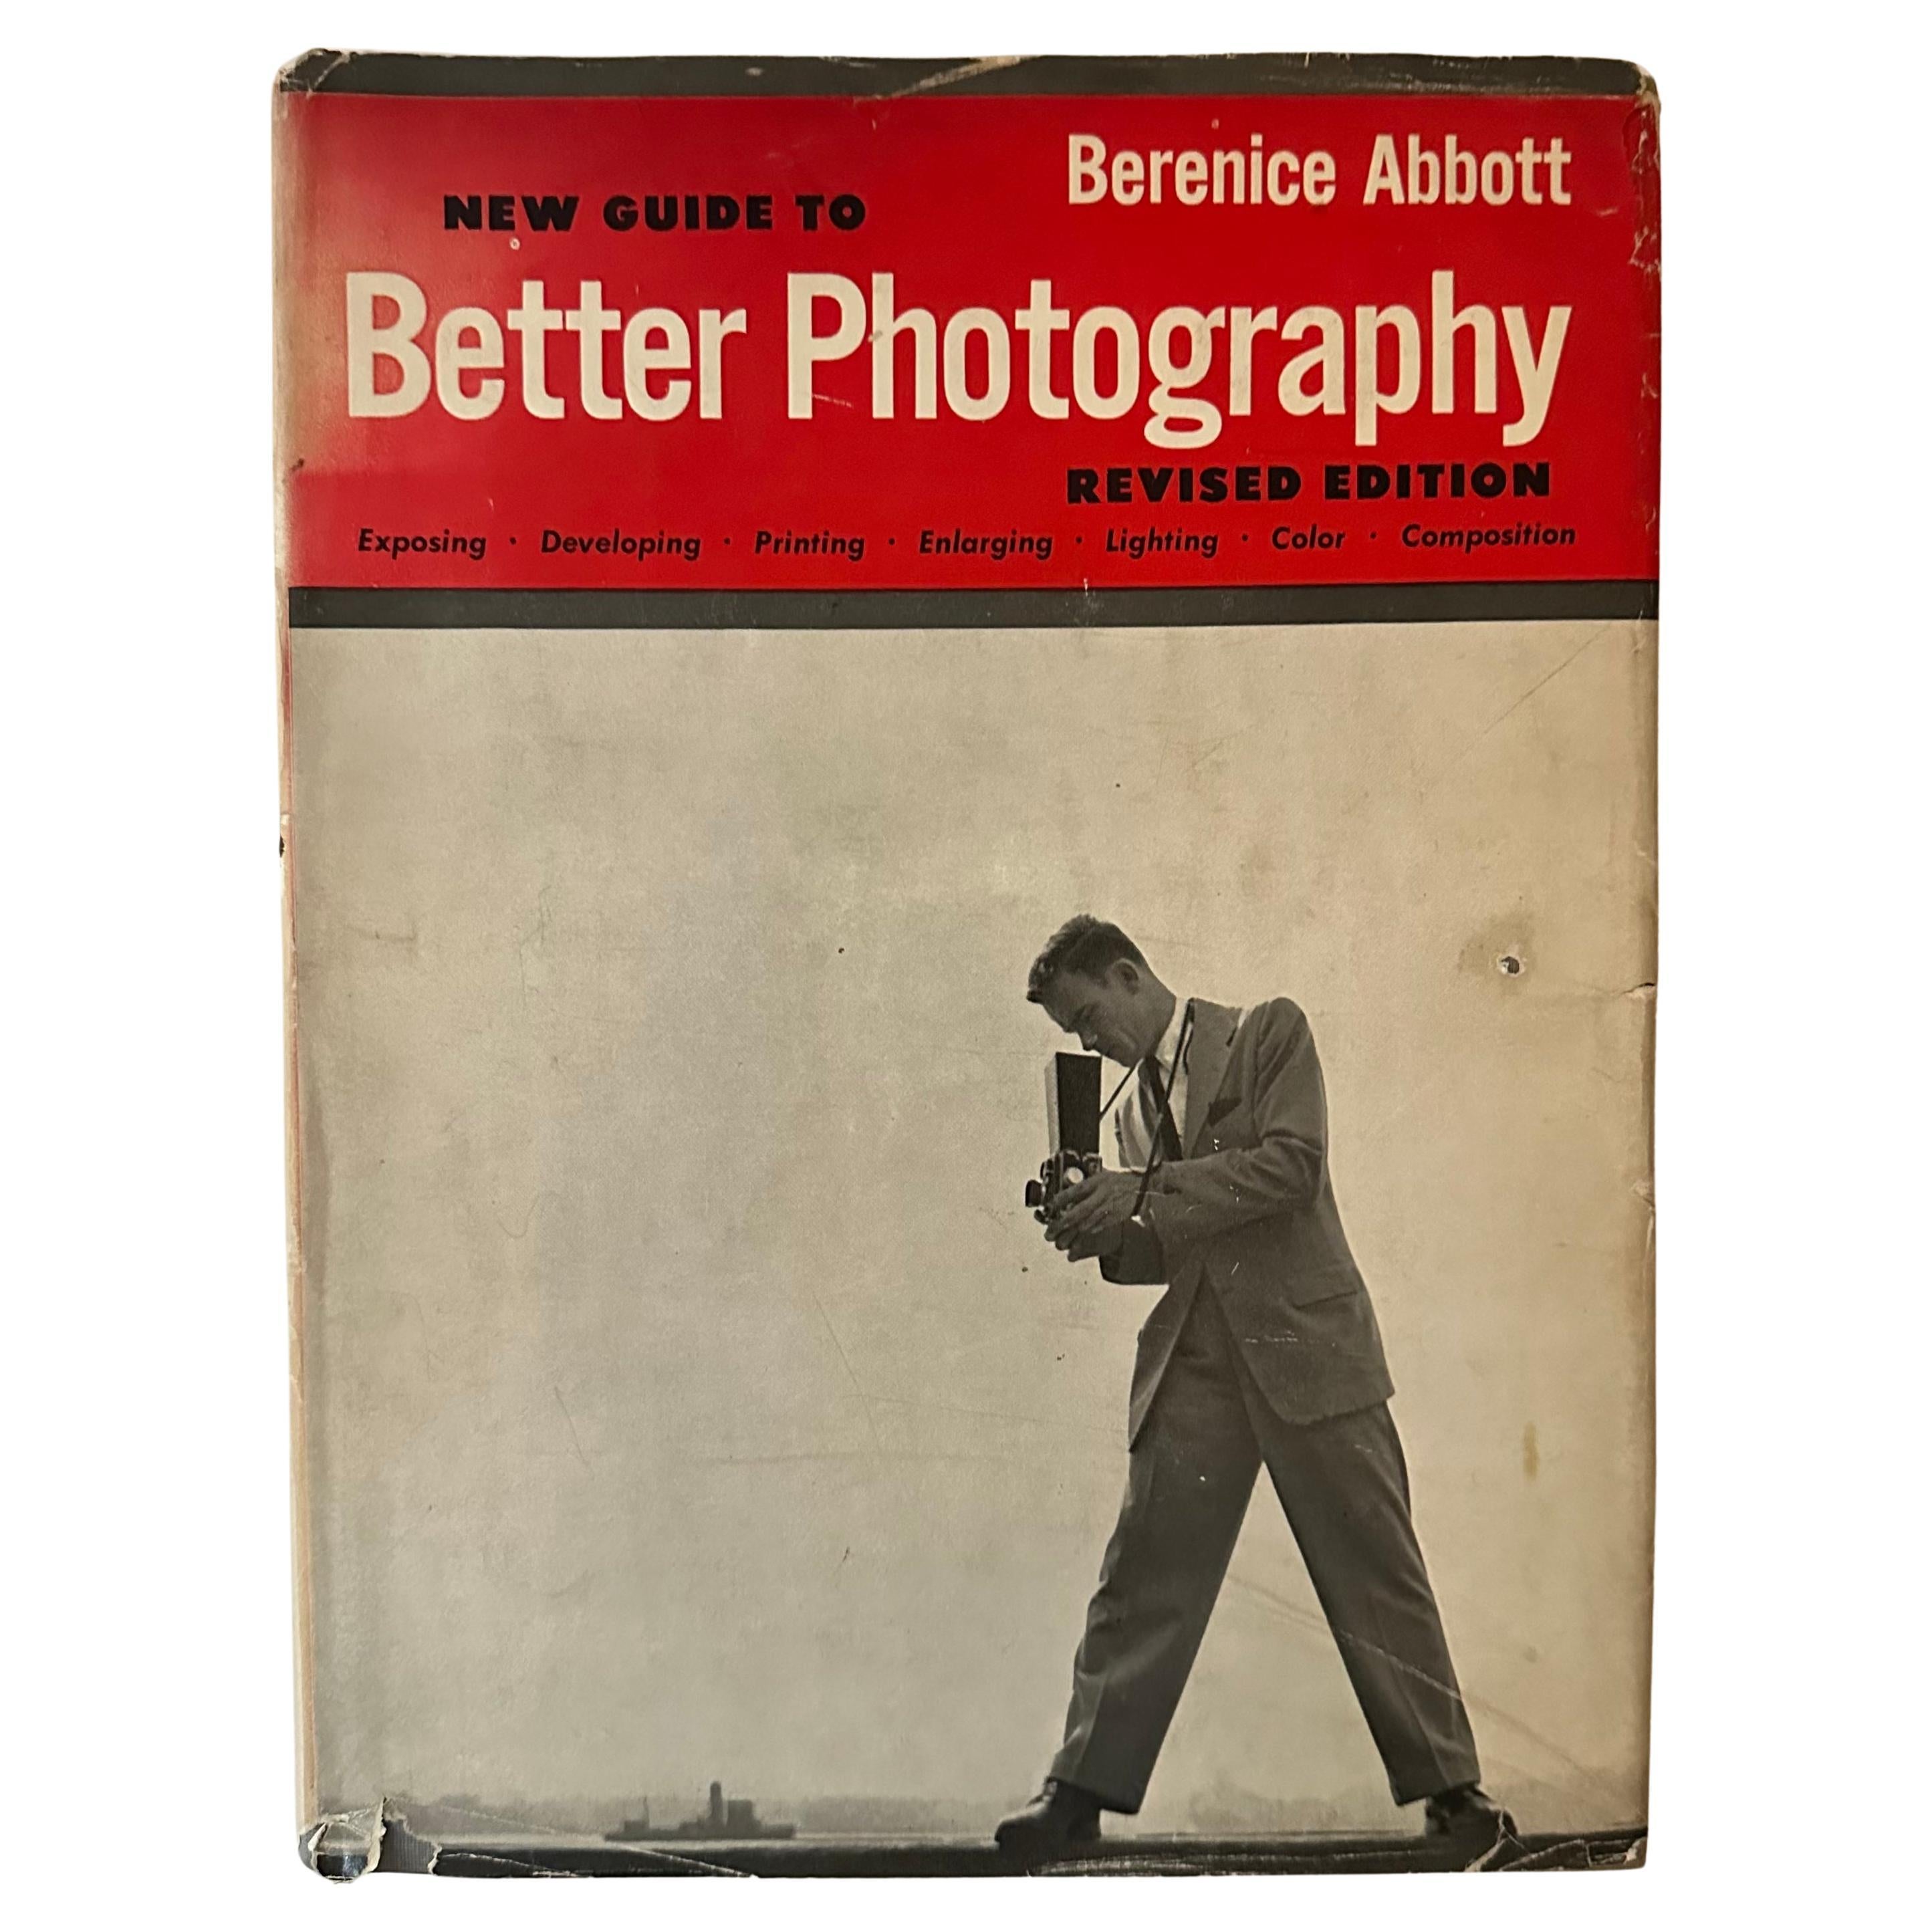 New Guide to Better Photography - Berenice Abbott, 1st ed, 1953